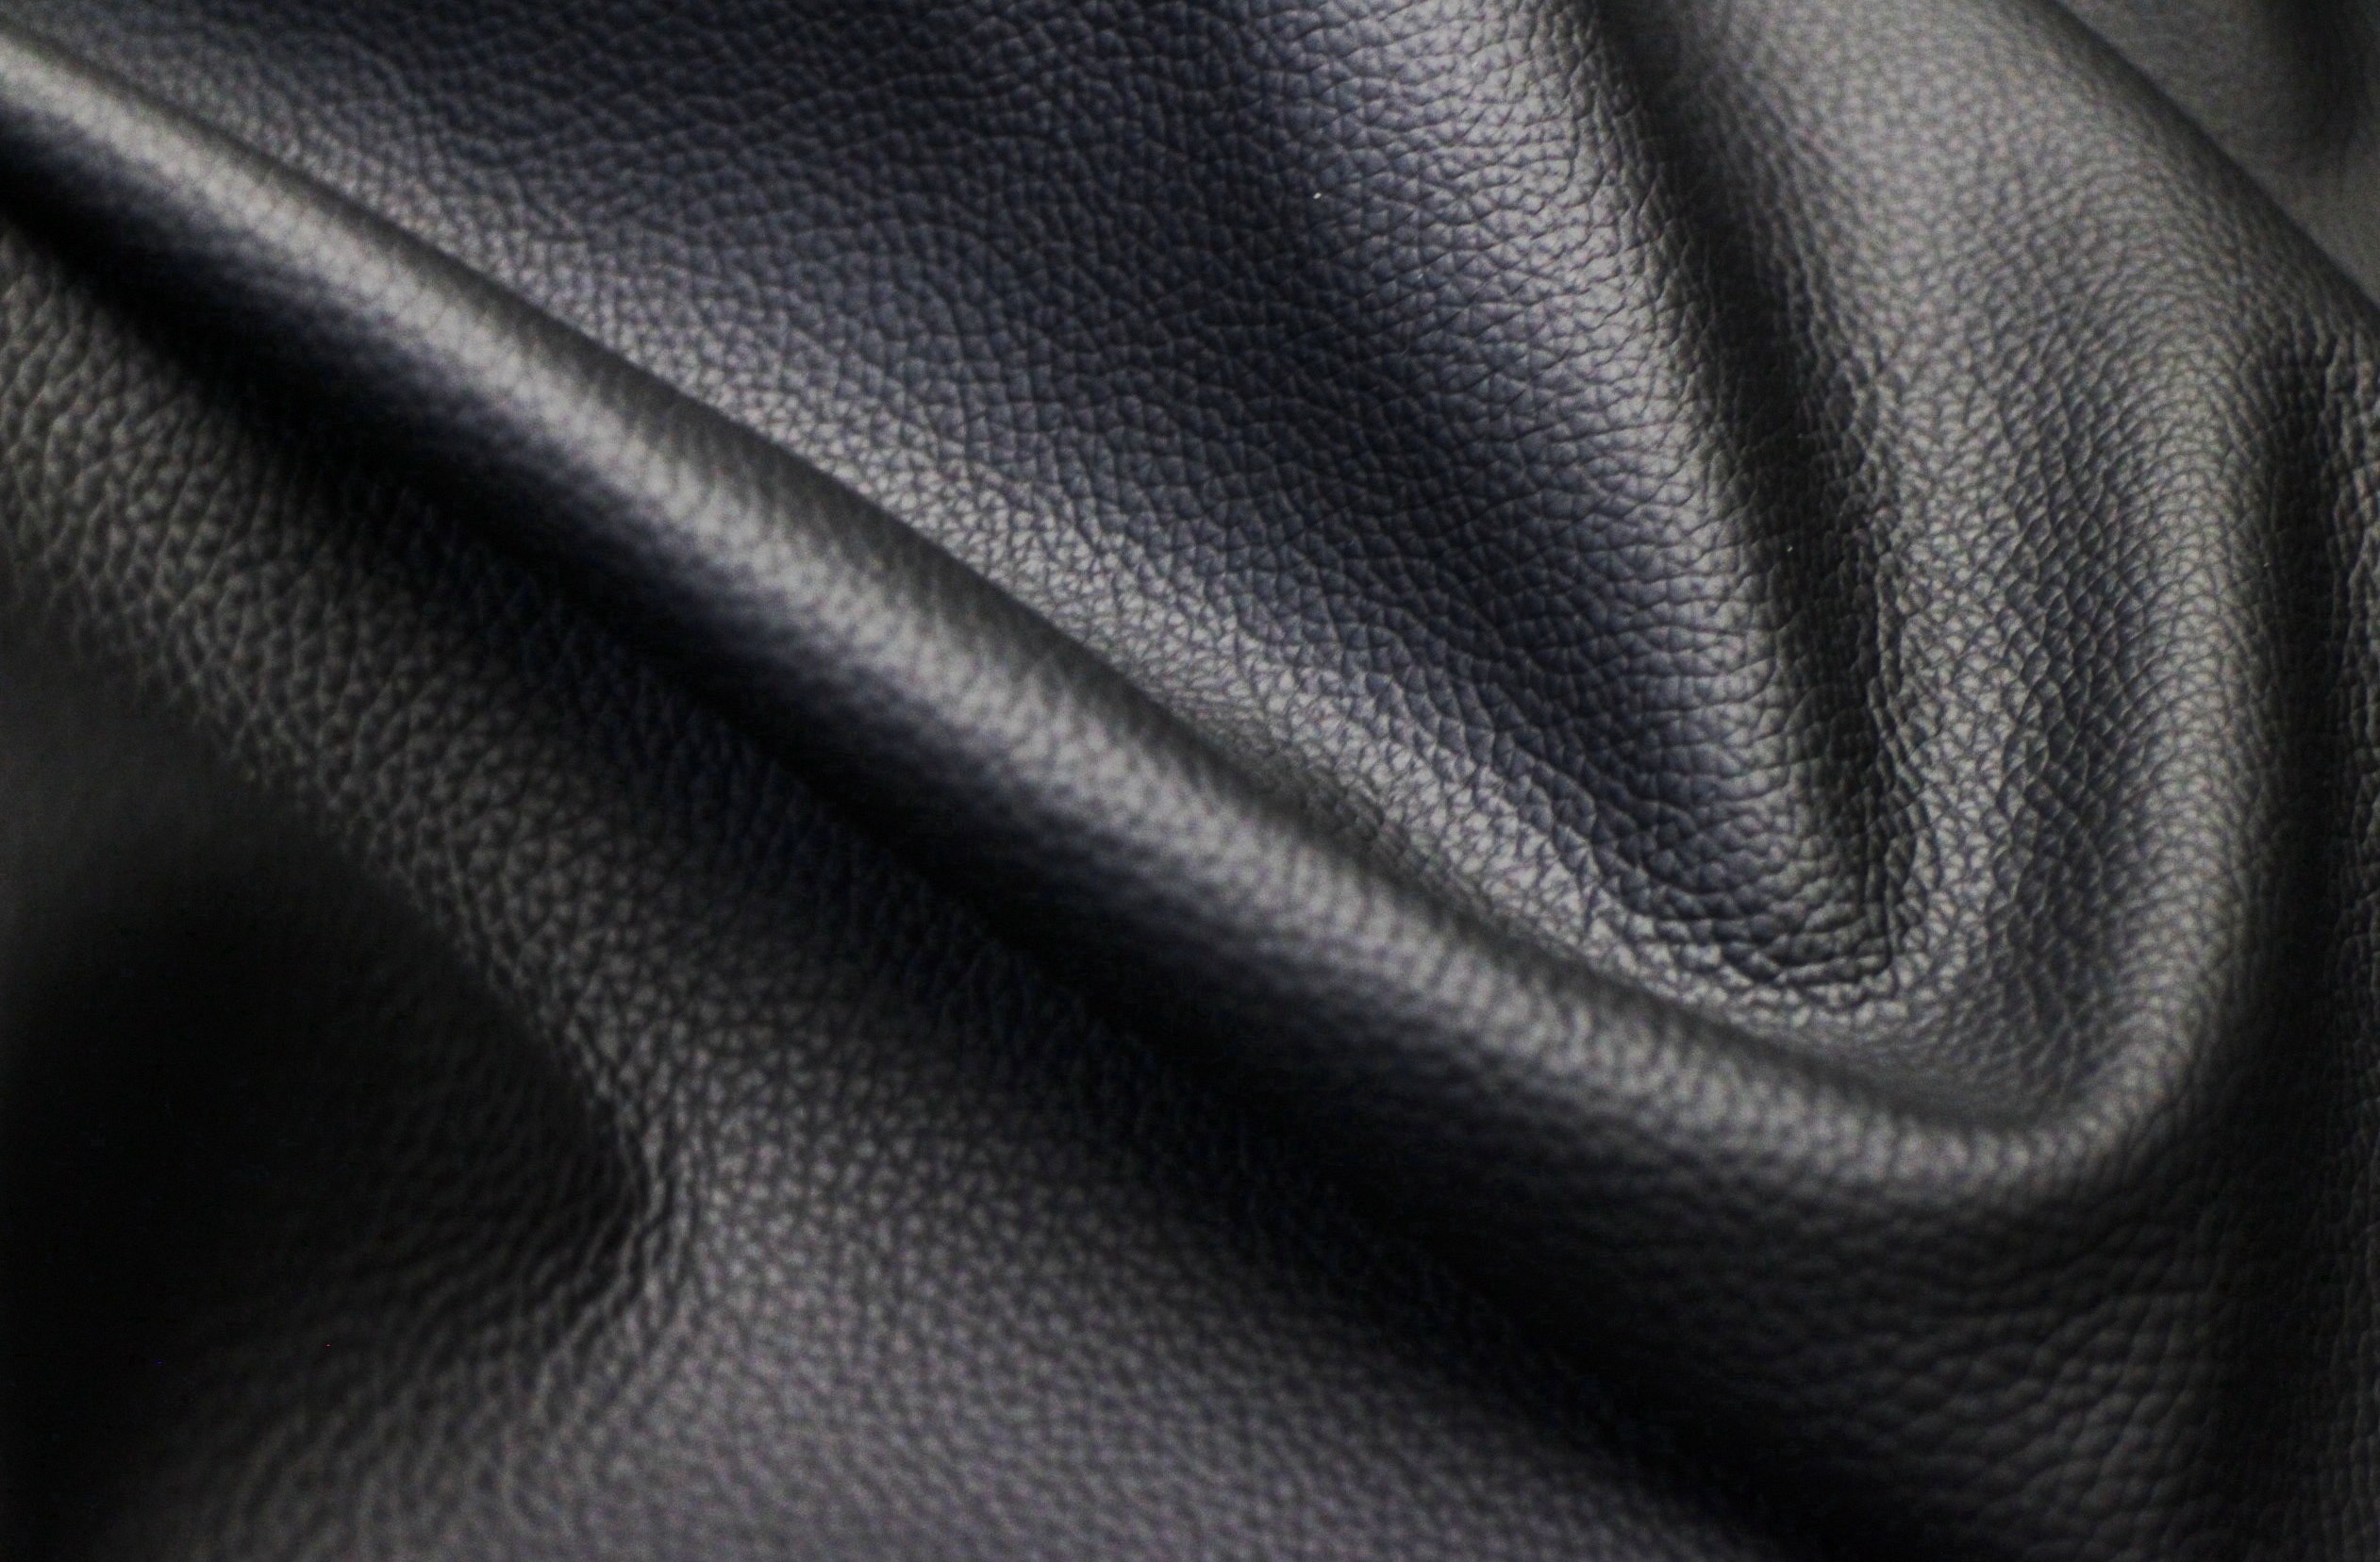 Medium & Large Size Pieces - Premium Italian Cowhide Leather Scraps upholstery 